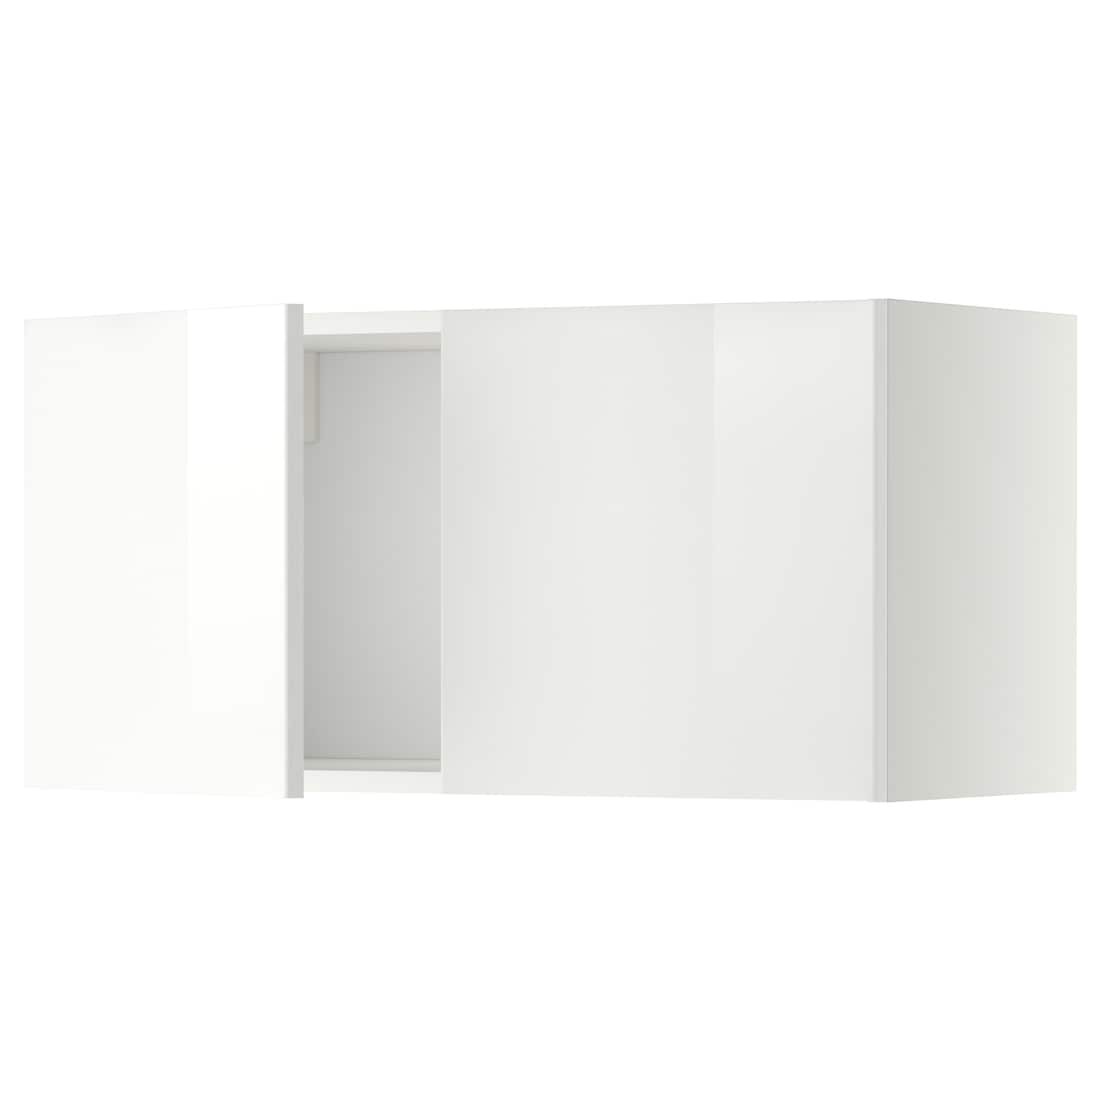 METOD МЕТОД Навесной шкаф с 2 дверями, белый / Ringhult белый, 80x40 см